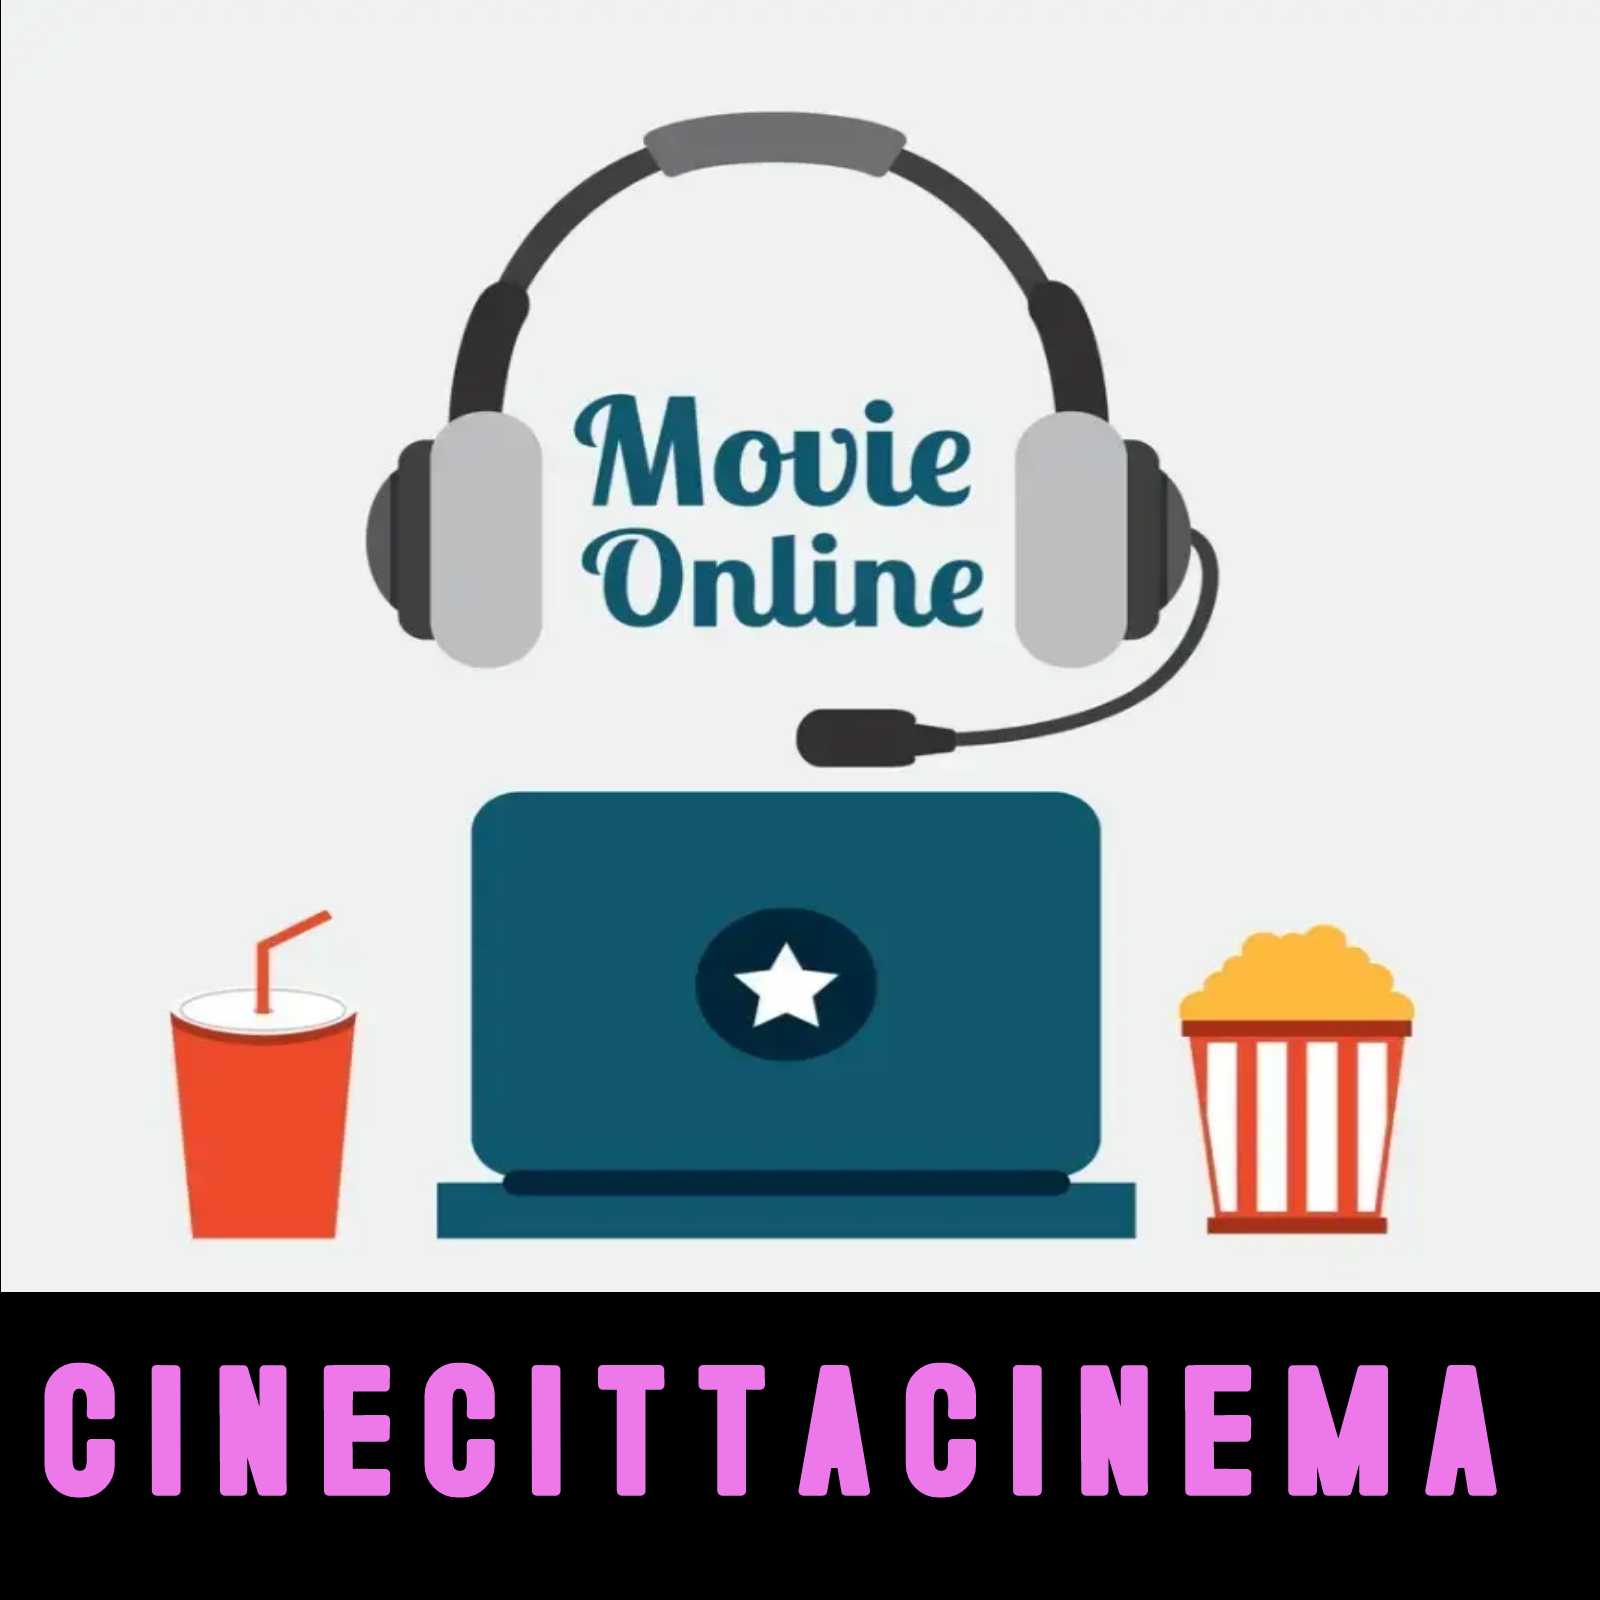 Cinecitta  Cinema (cinecittacinema)